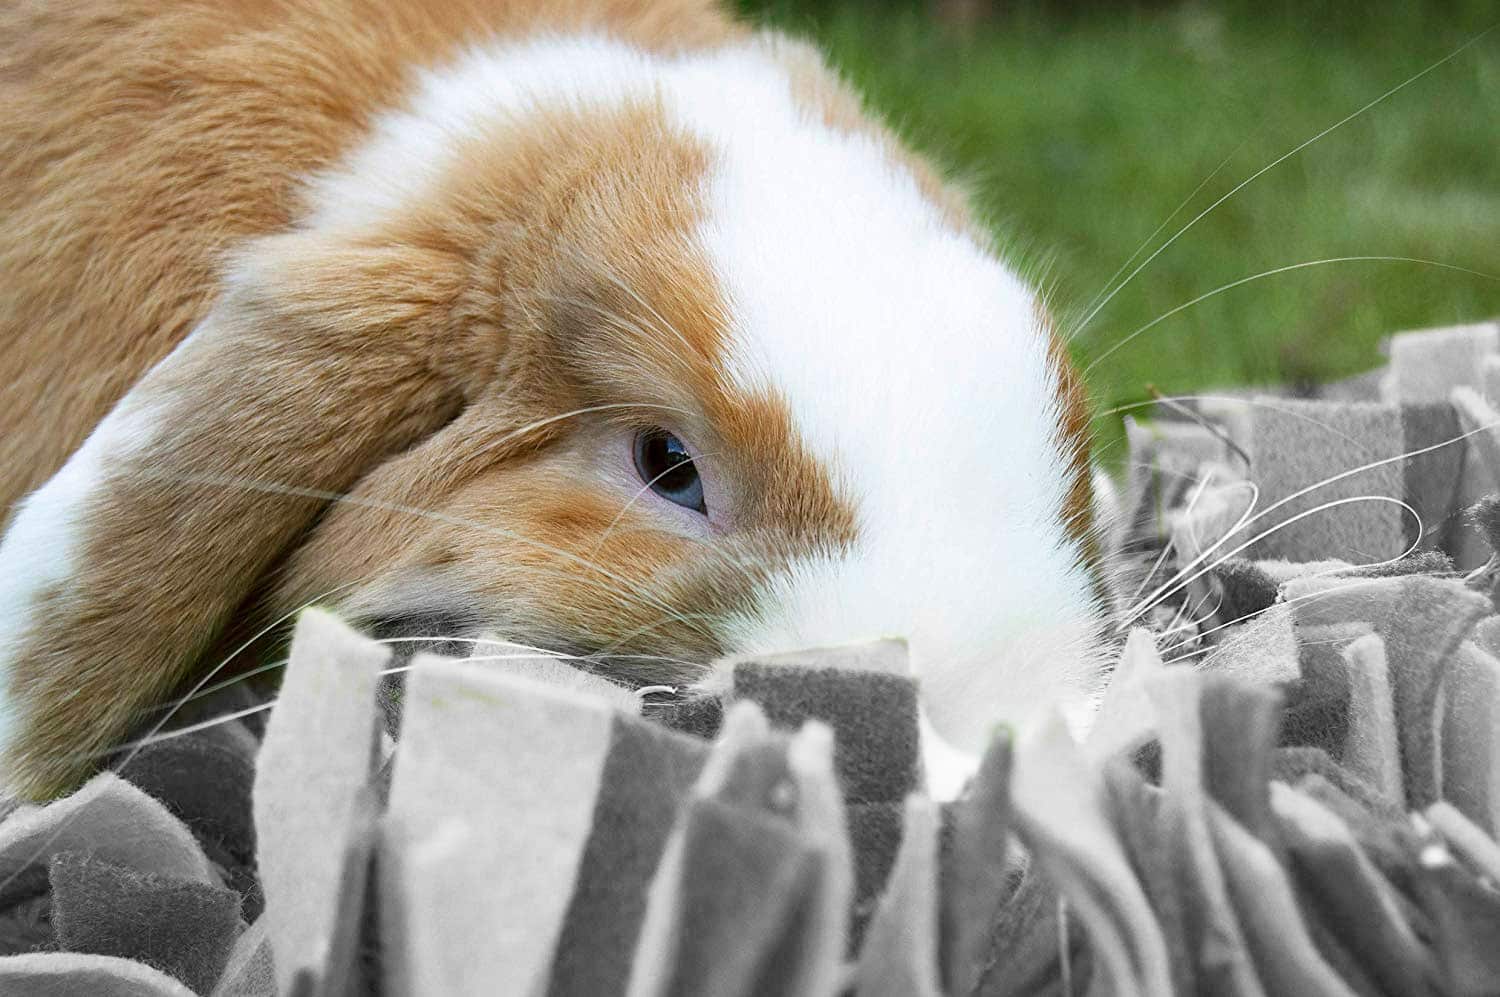 Foraging mat for rabbits Rabbit snuffle mat